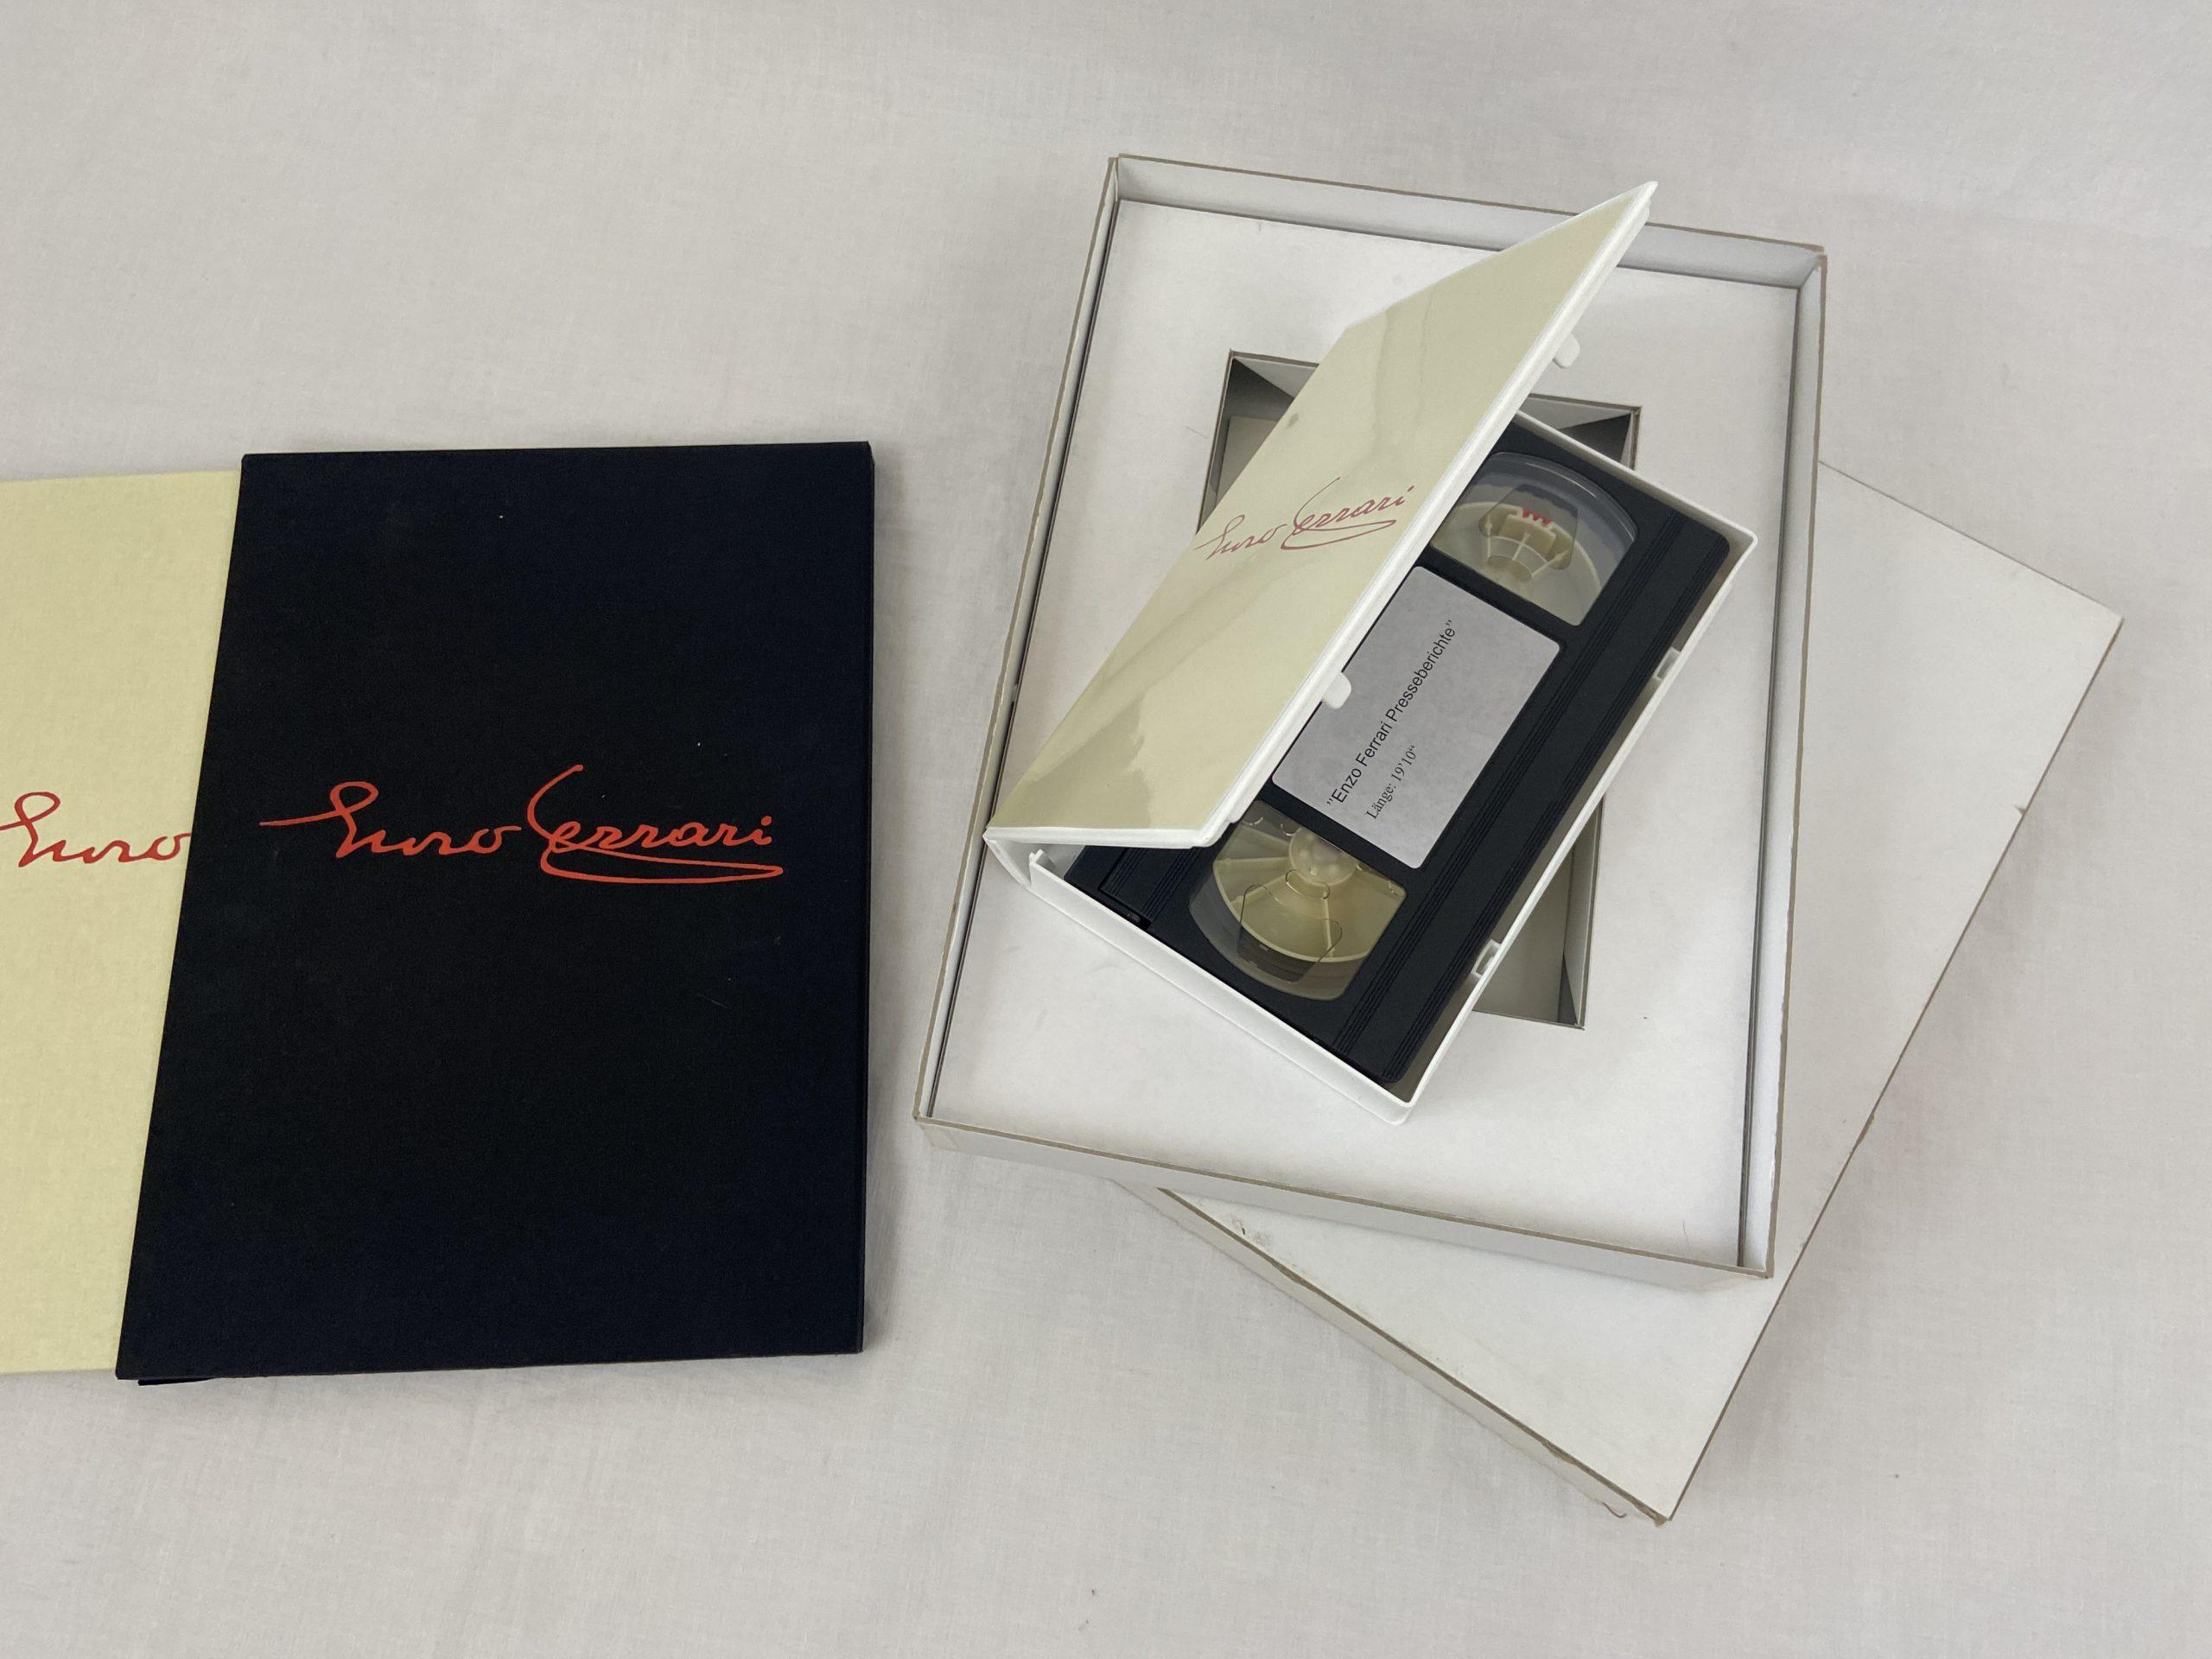 Enzo Ferrari Press Introduction Kit, Press Release Book - VHS Video ...